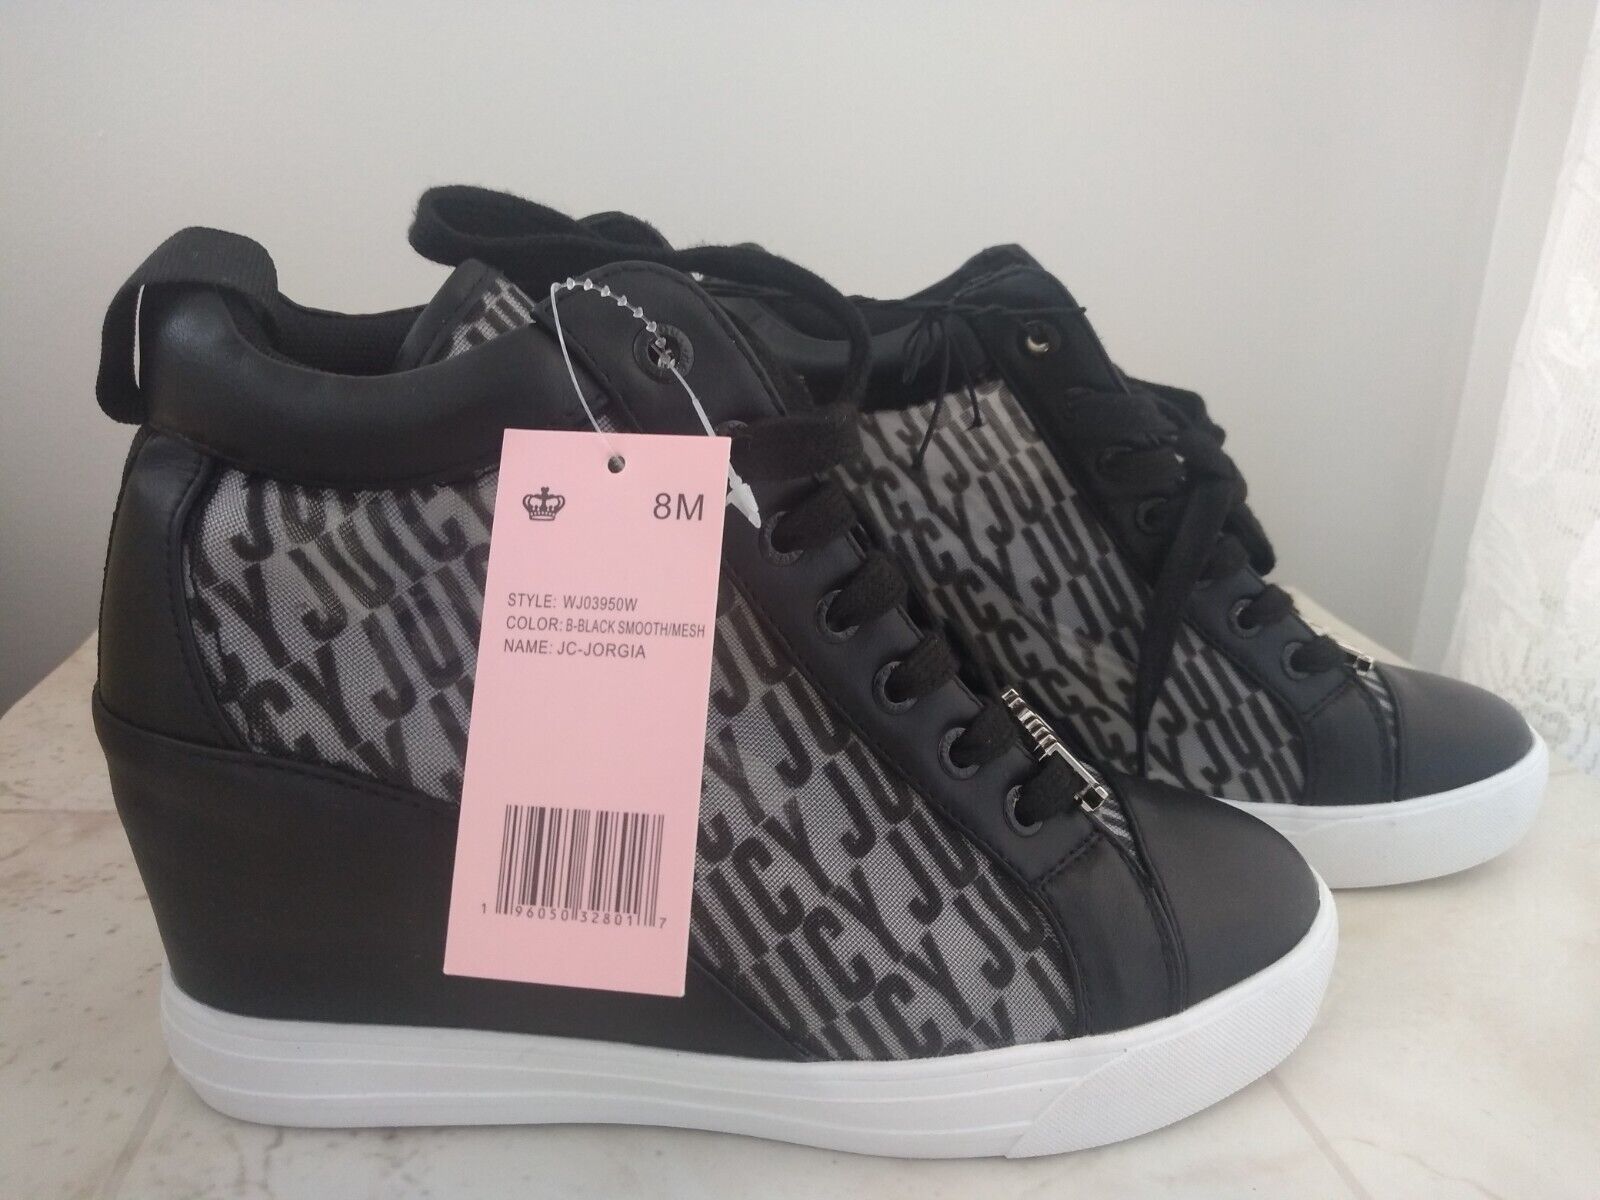 Fordi Direkte Integral Juicy Couture Jorgia Women&#039;s Wedge Sneakers size 8M | eBay